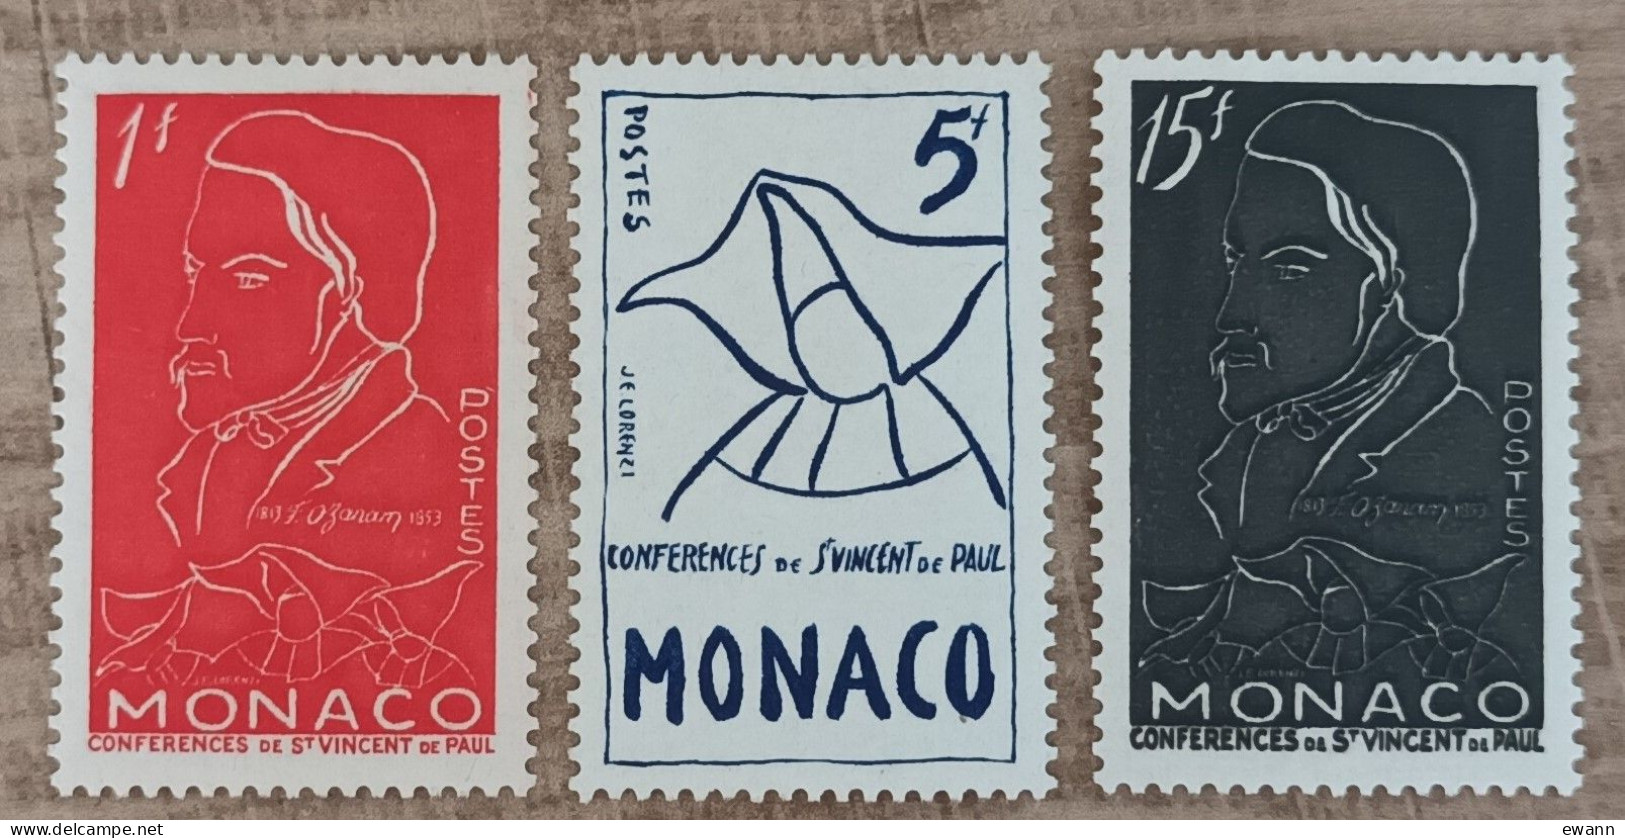 Monaco - YT N°399 à 401 - Antoine Frédéric Ozanam - 1954 - Neuf - Neufs